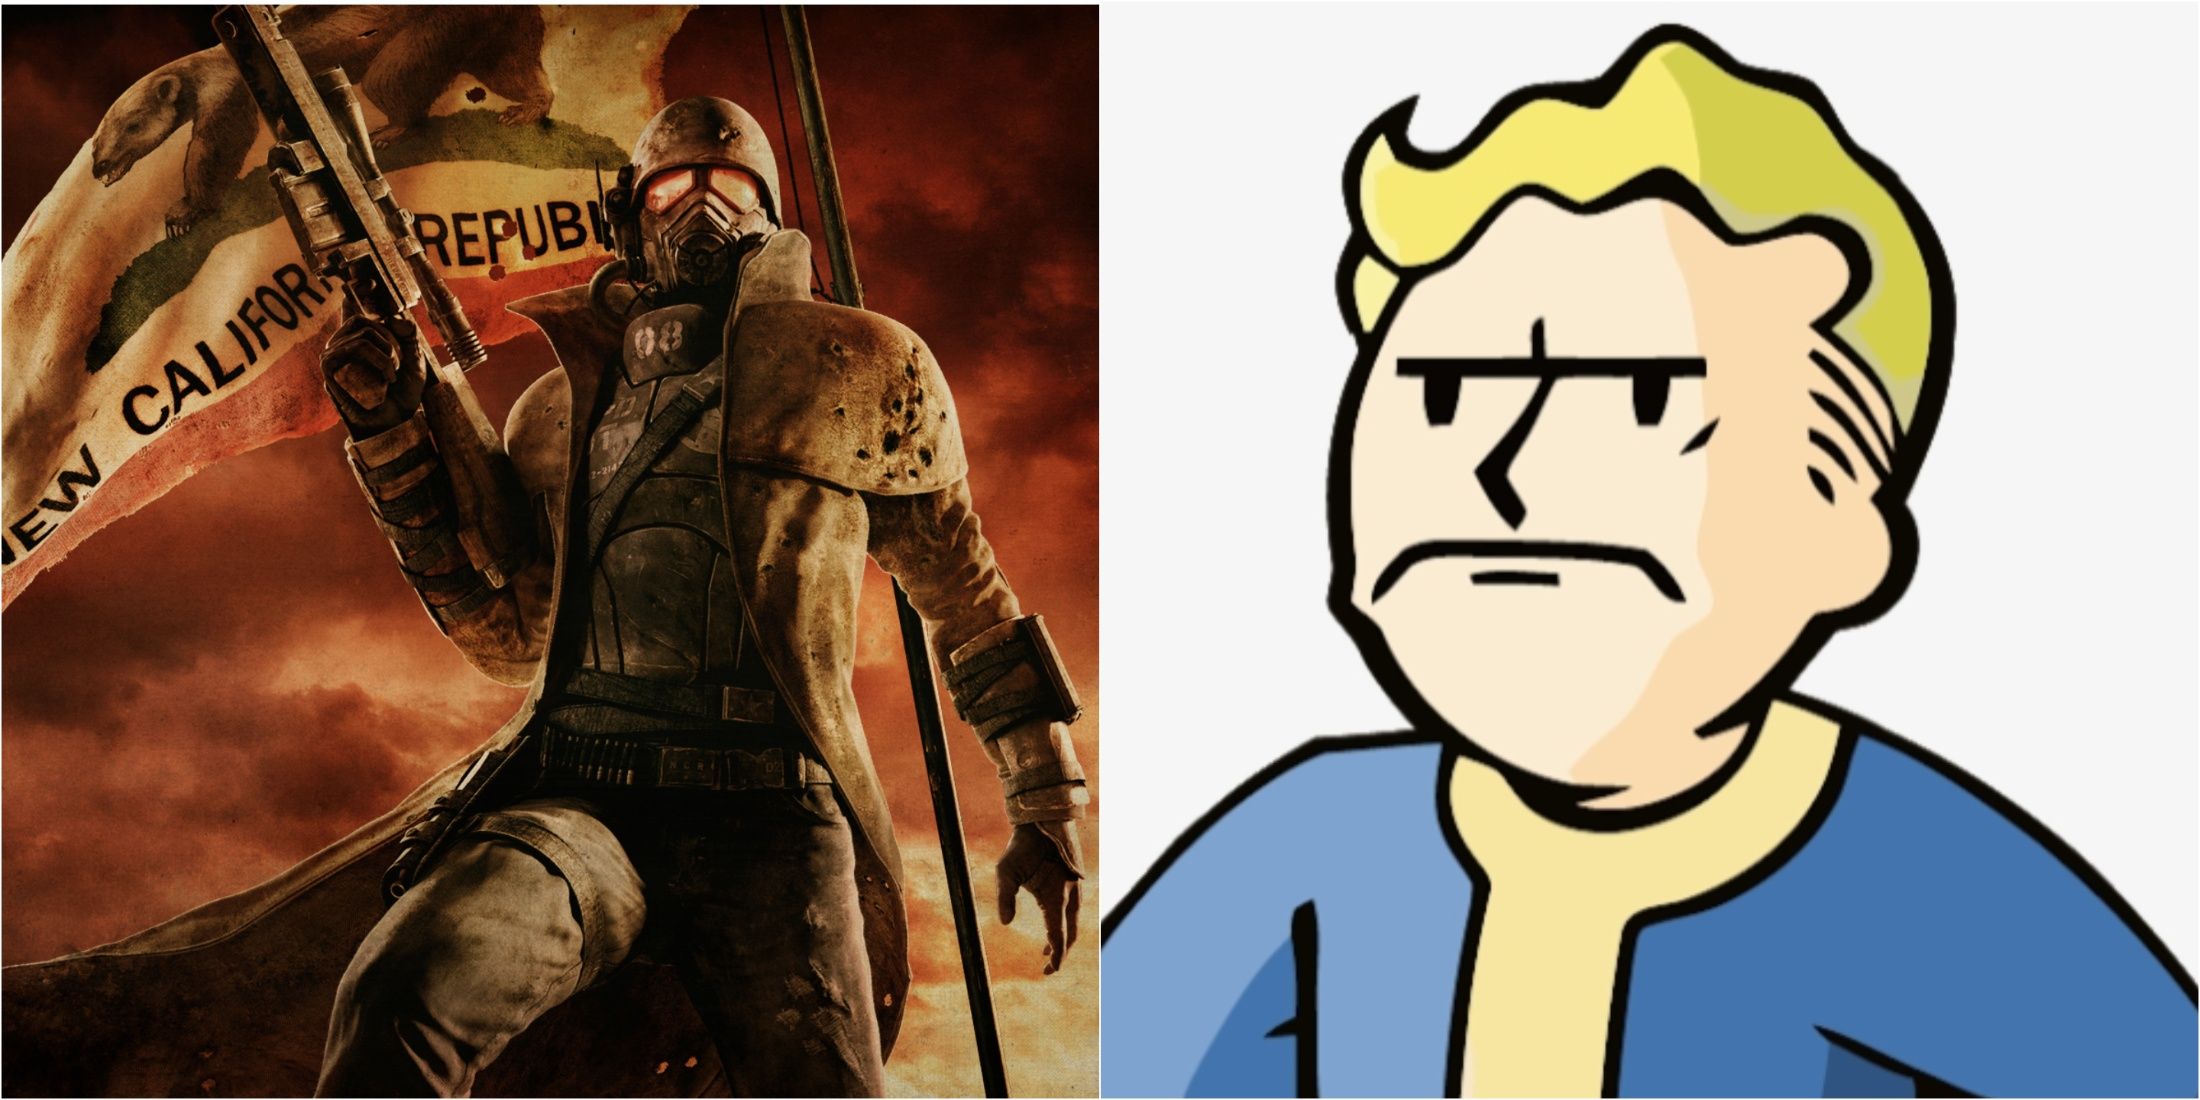 Key art for Fallout: New Vegas next to series mascot Vault Boy